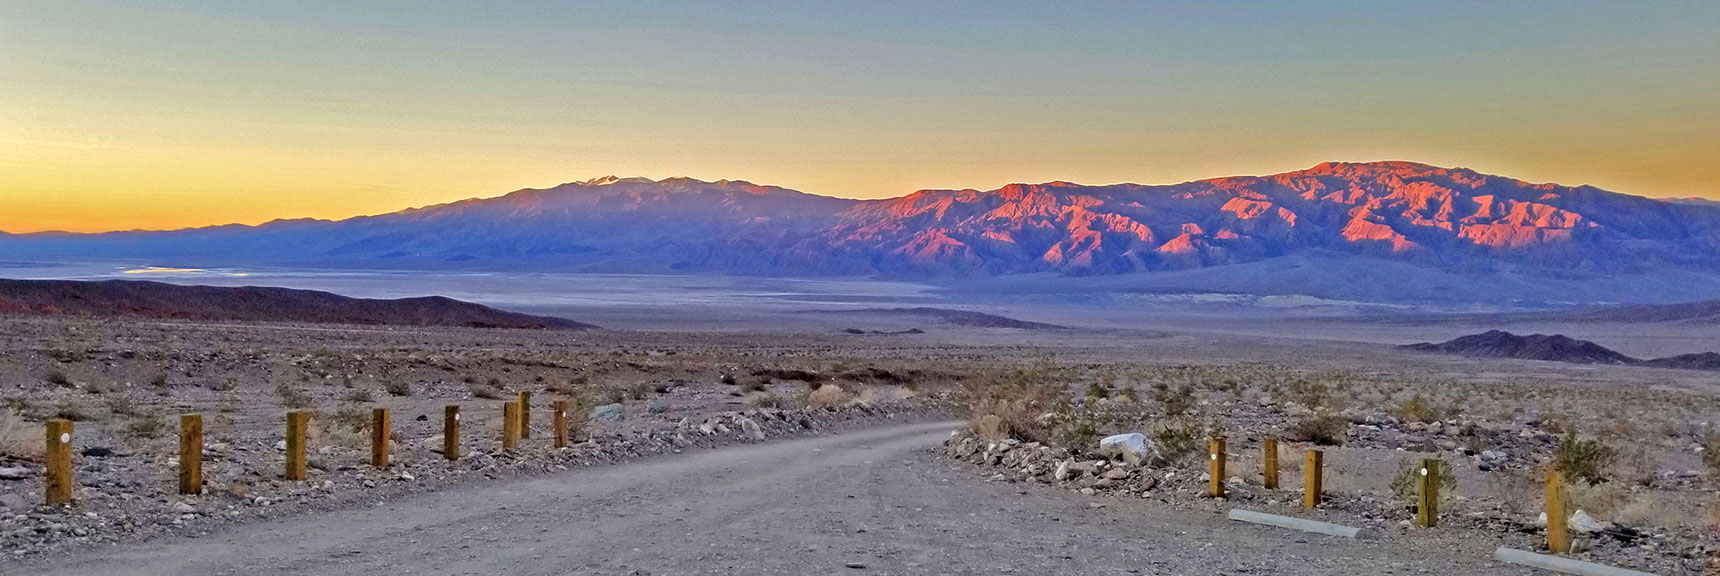 Sunrise Over Panamint Range from Keane Wonder Mine Parking Area | Keane Wonder Mine | Death Valley National Park, California